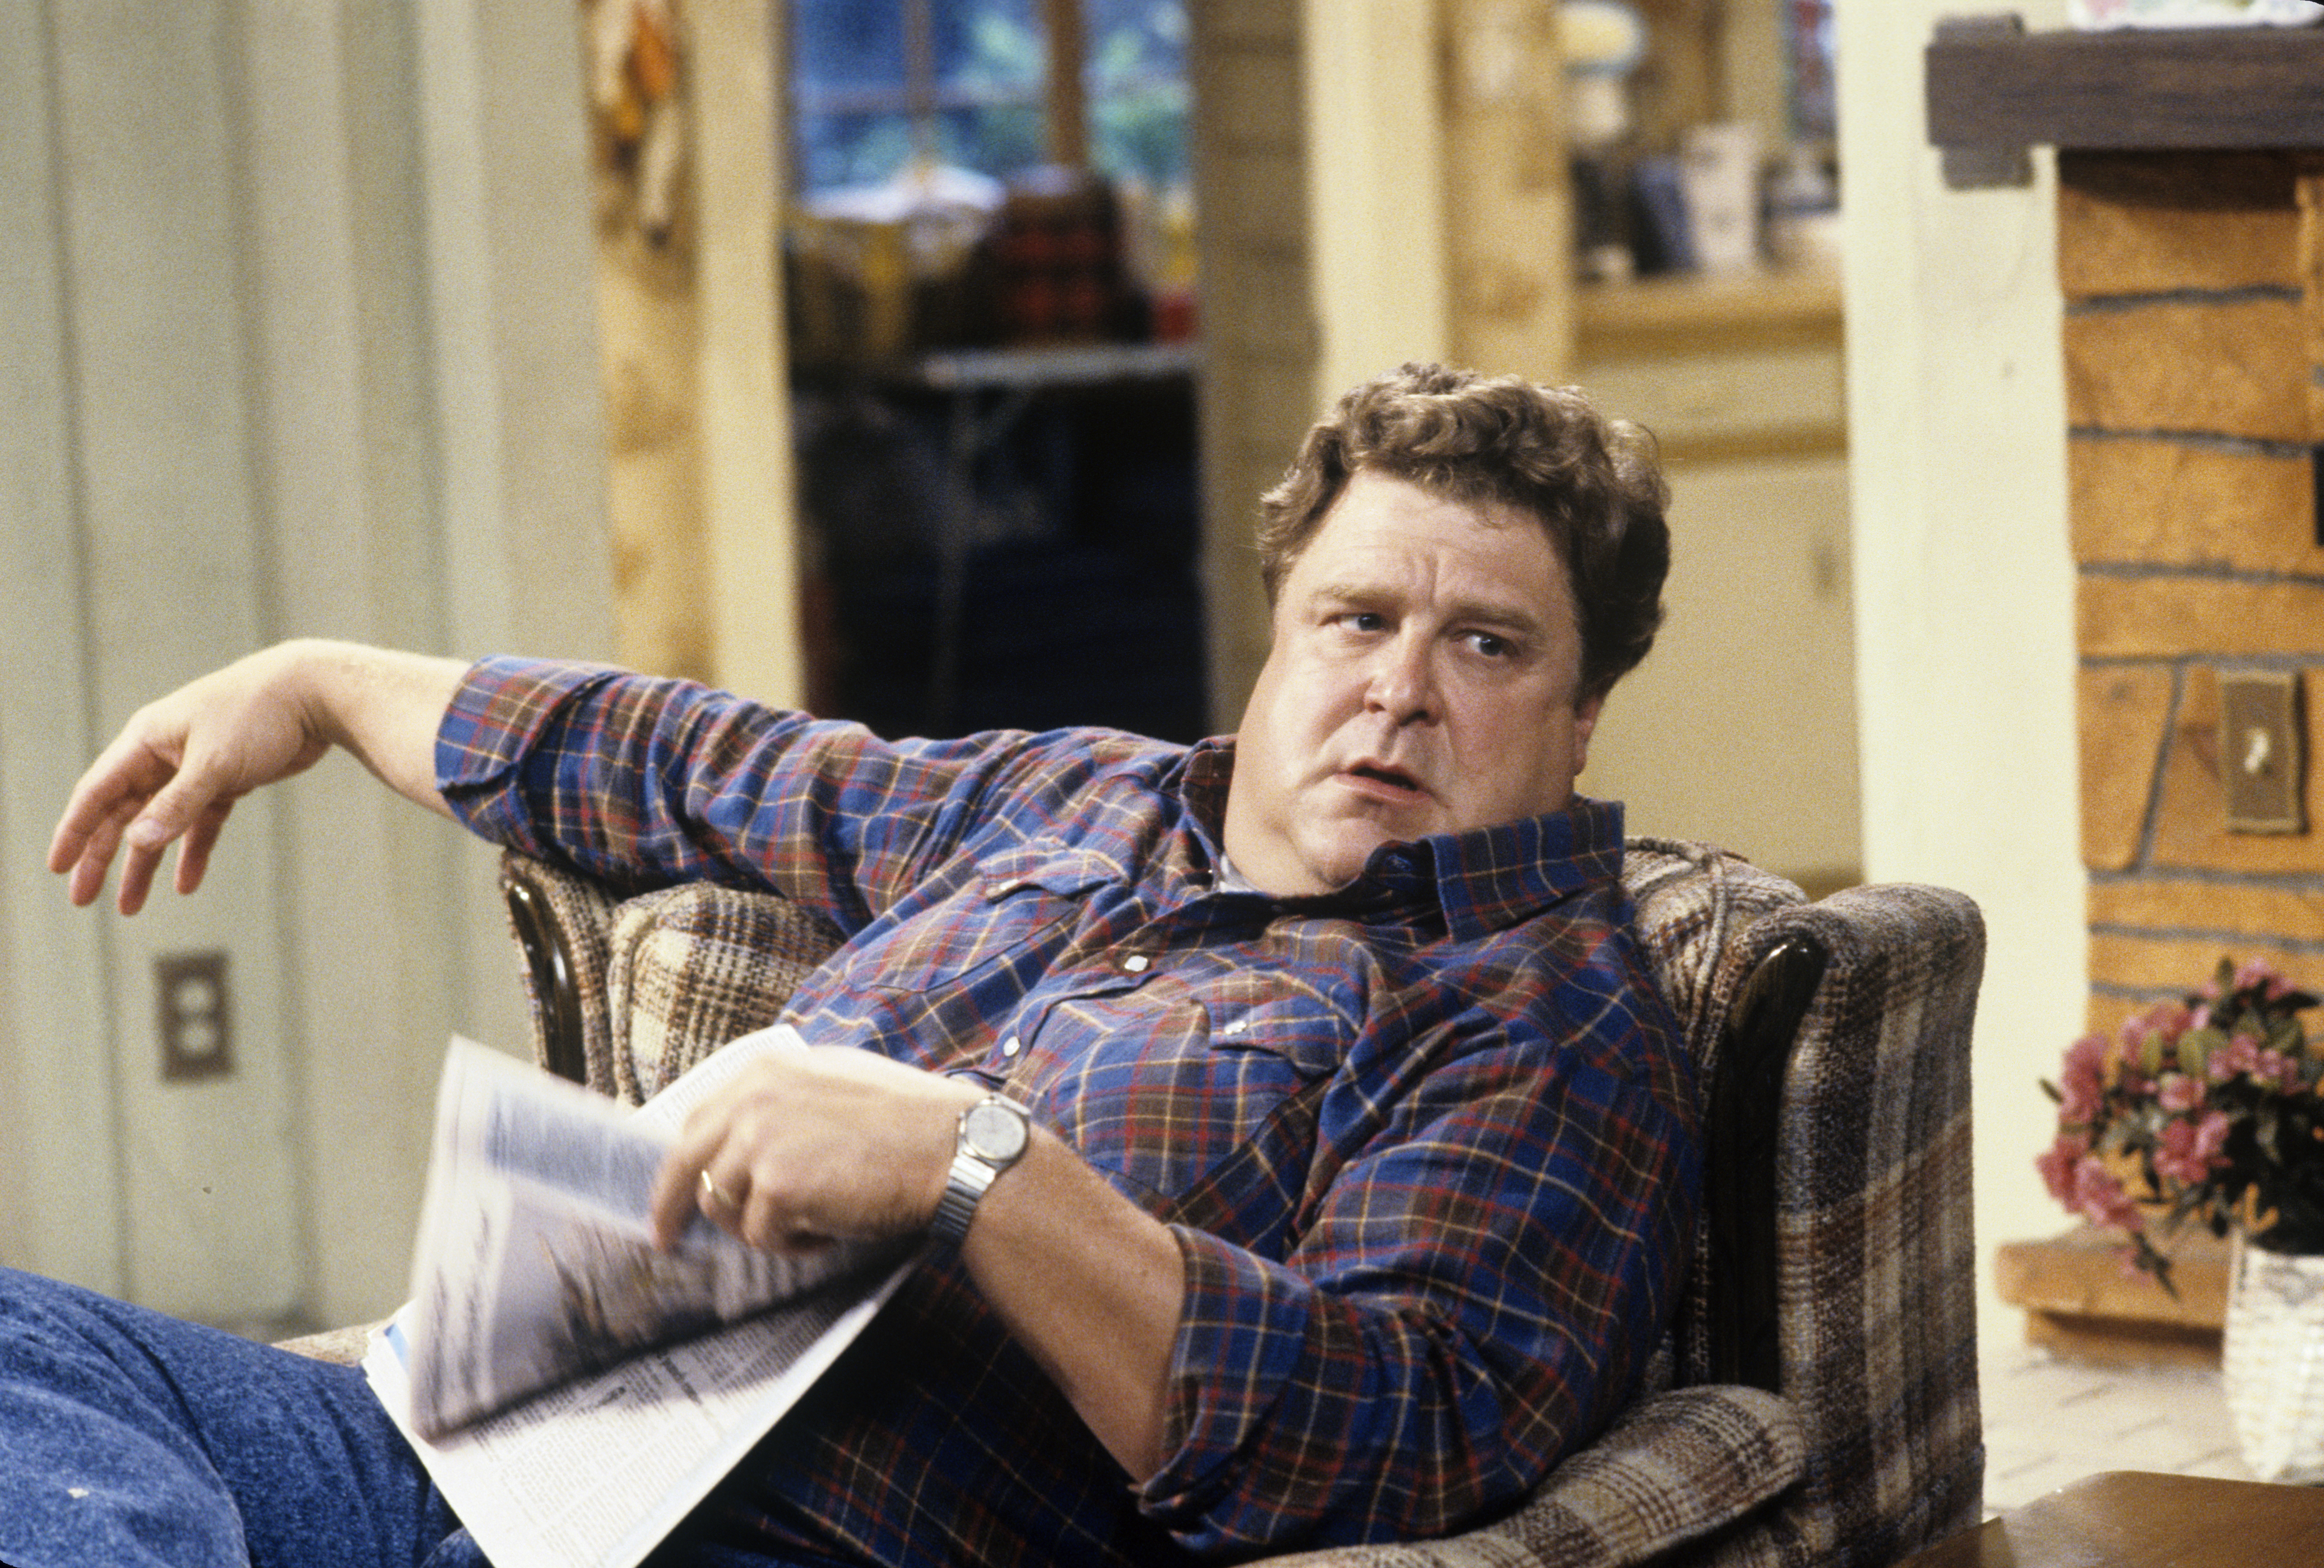 John Goodman on "Roseanne" in 1992 | Source: Getty Images